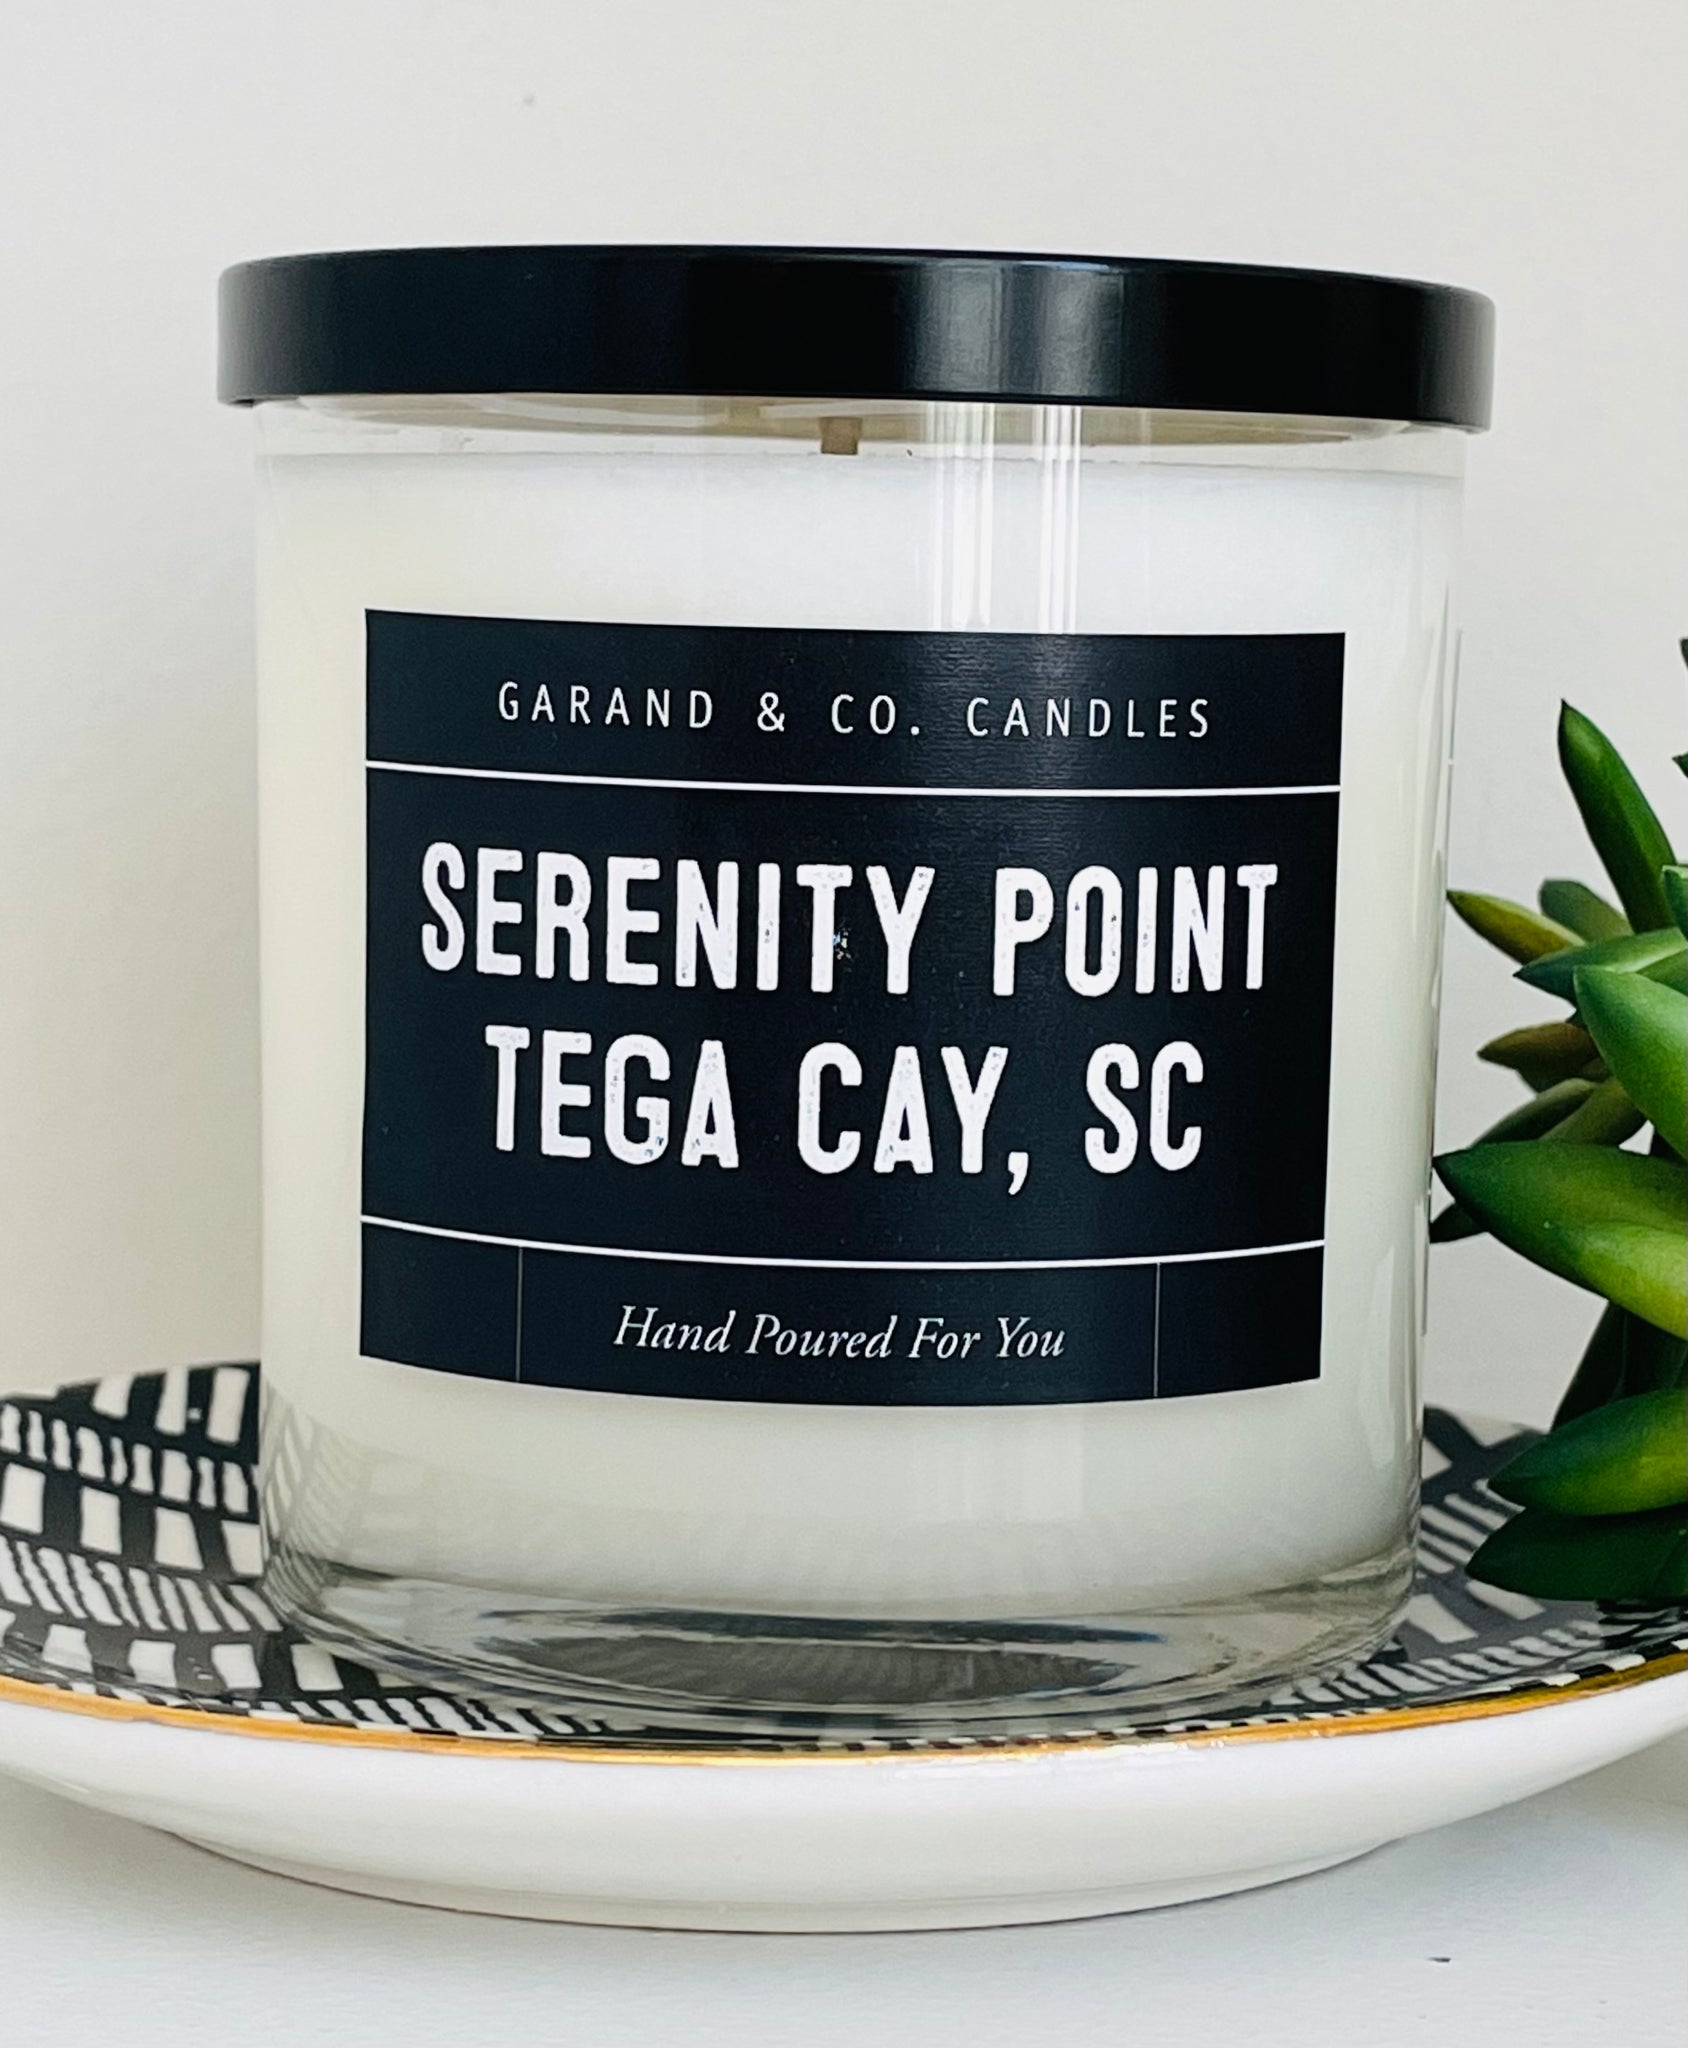 12 oz Clear Glass Jar Candle - Serenity Point Tega Cay, SC